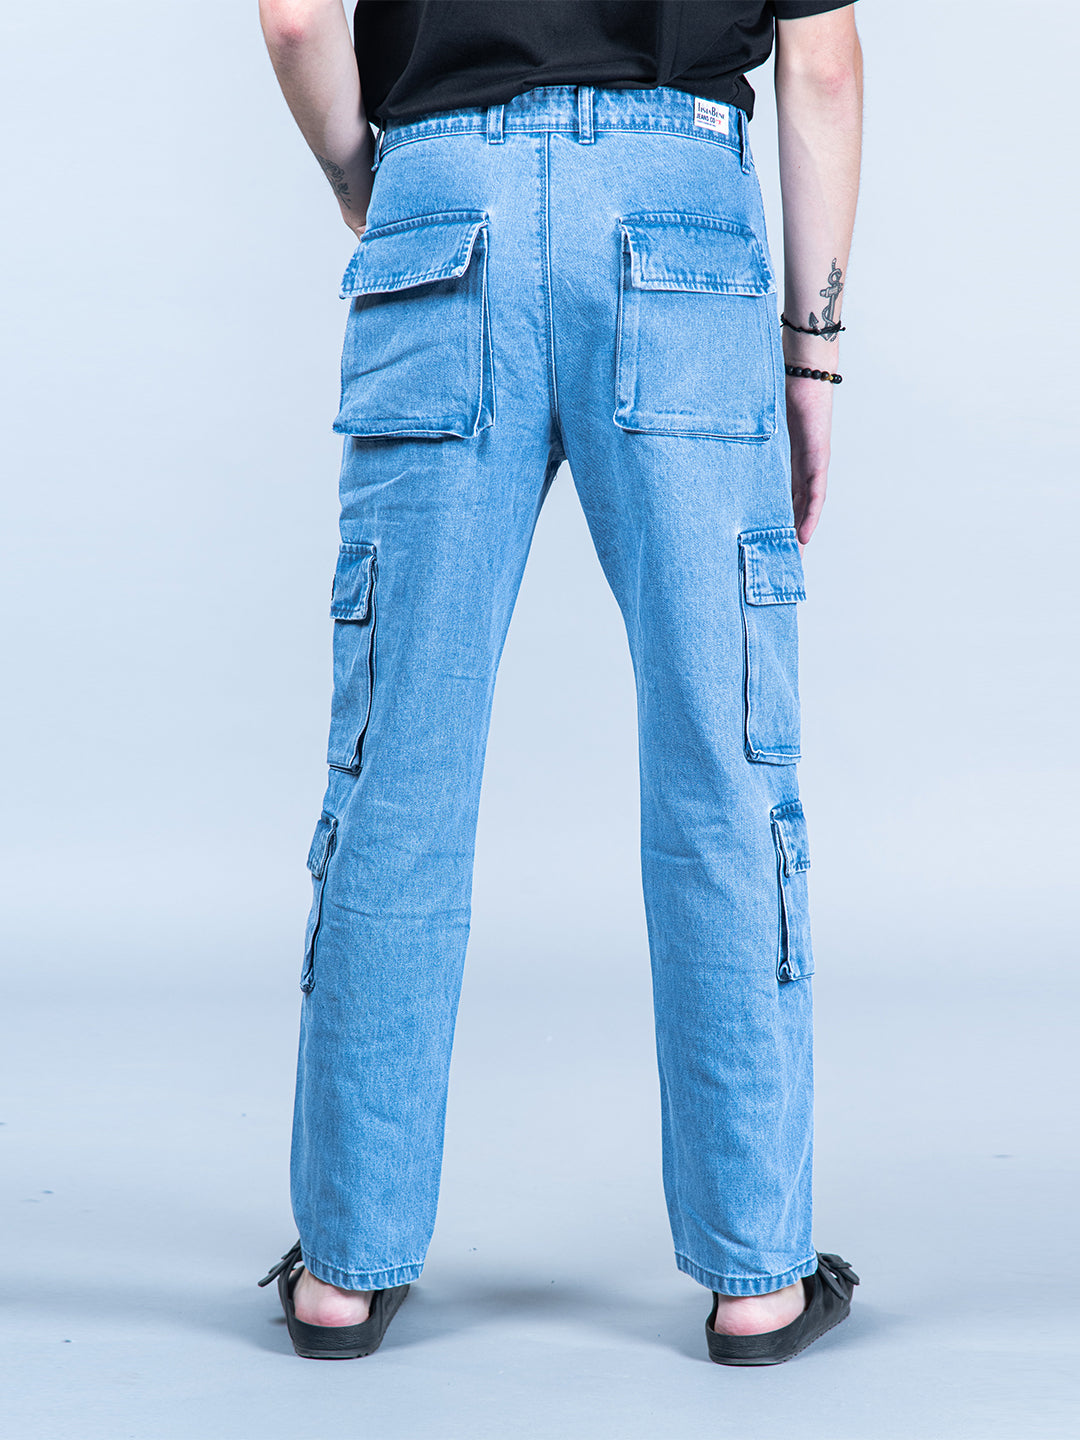 Flap Pocket Cargo Jeans | Cargo pants outfit, Women jeans, Women denim jeans